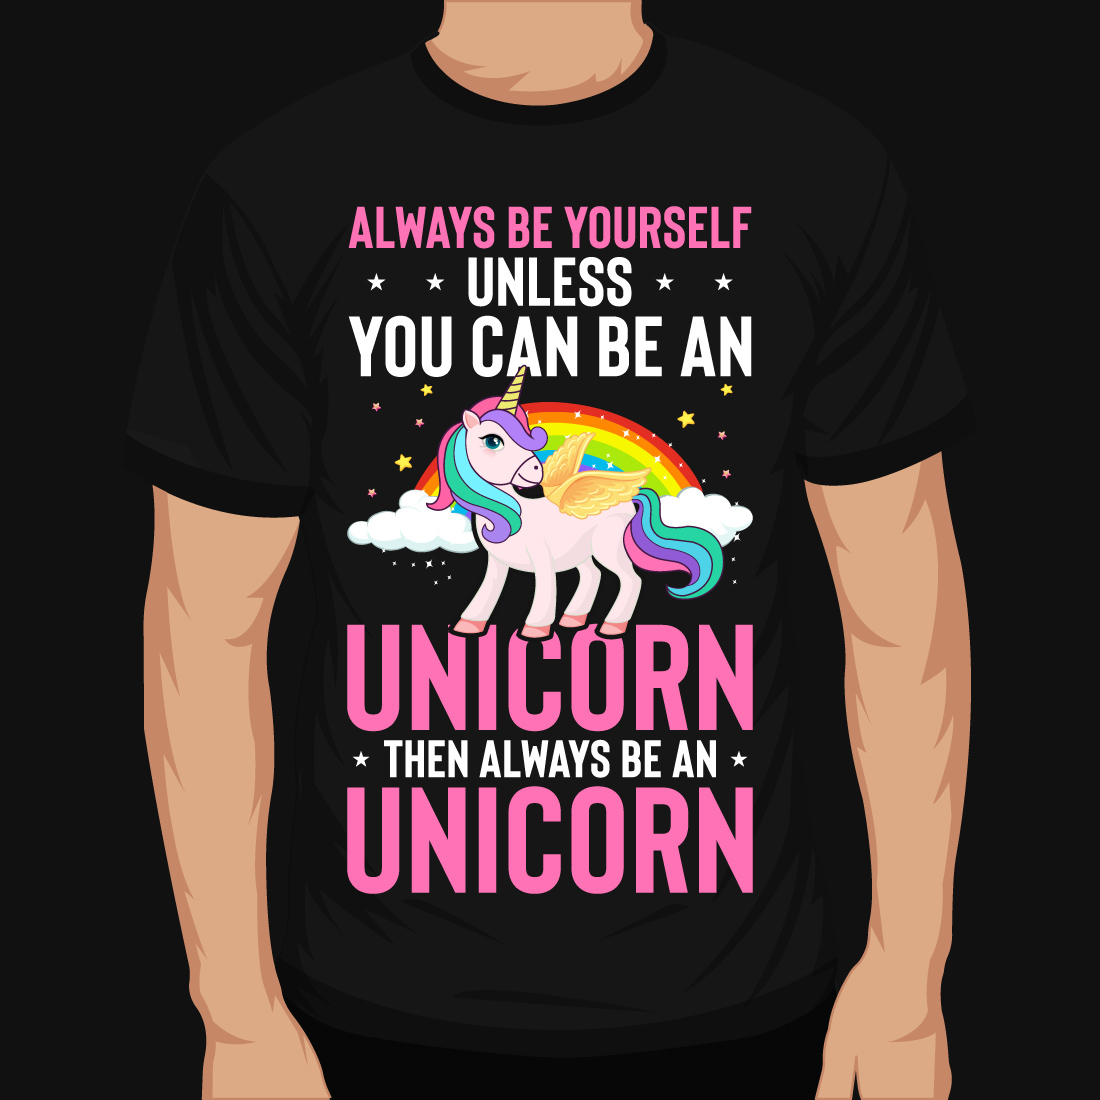 Unicorn T-Shirt Designs cover image.